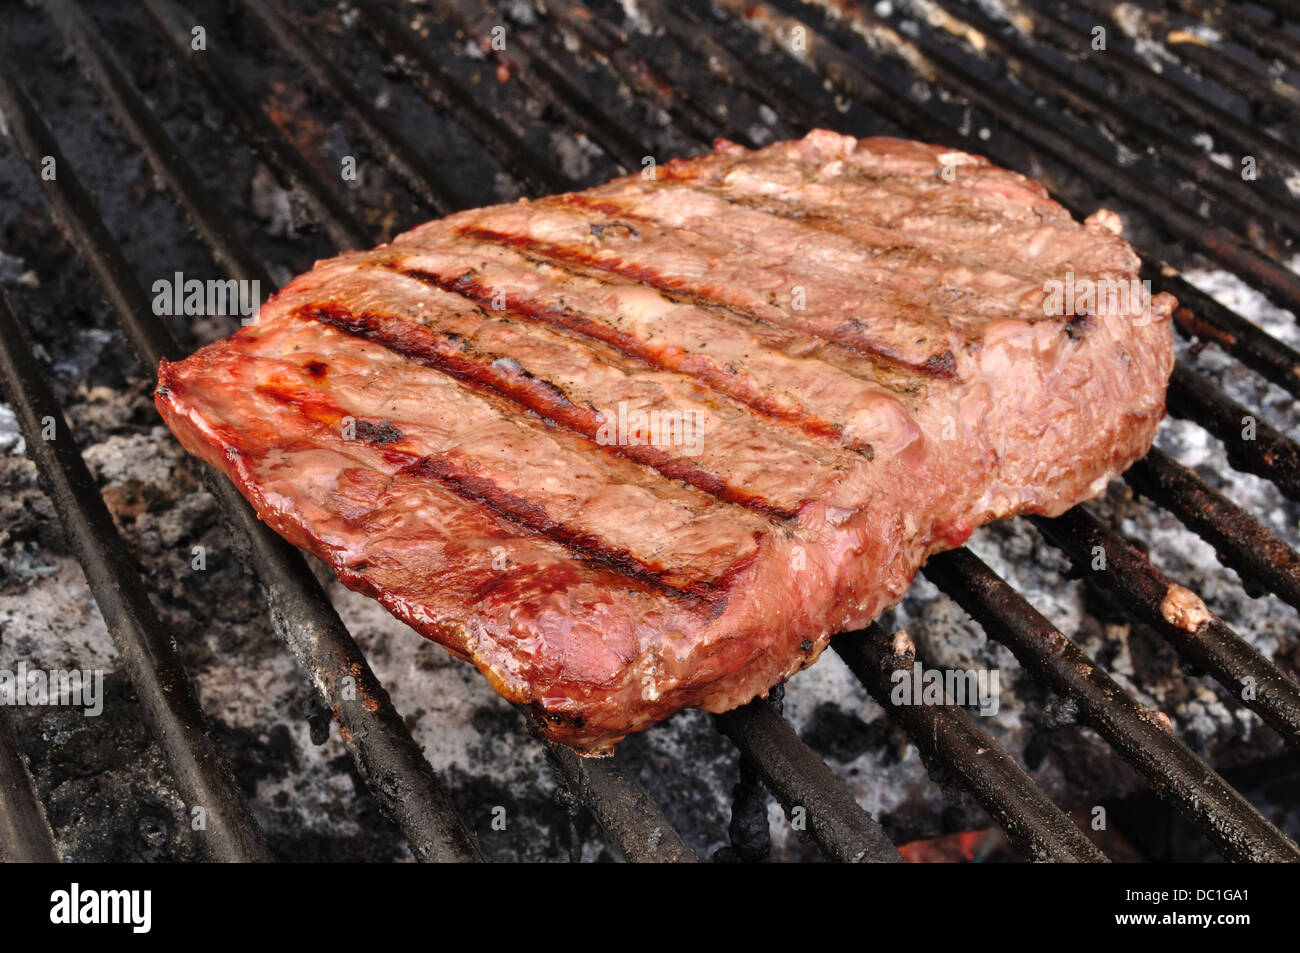 Carne en una barbacoa Foto de stock